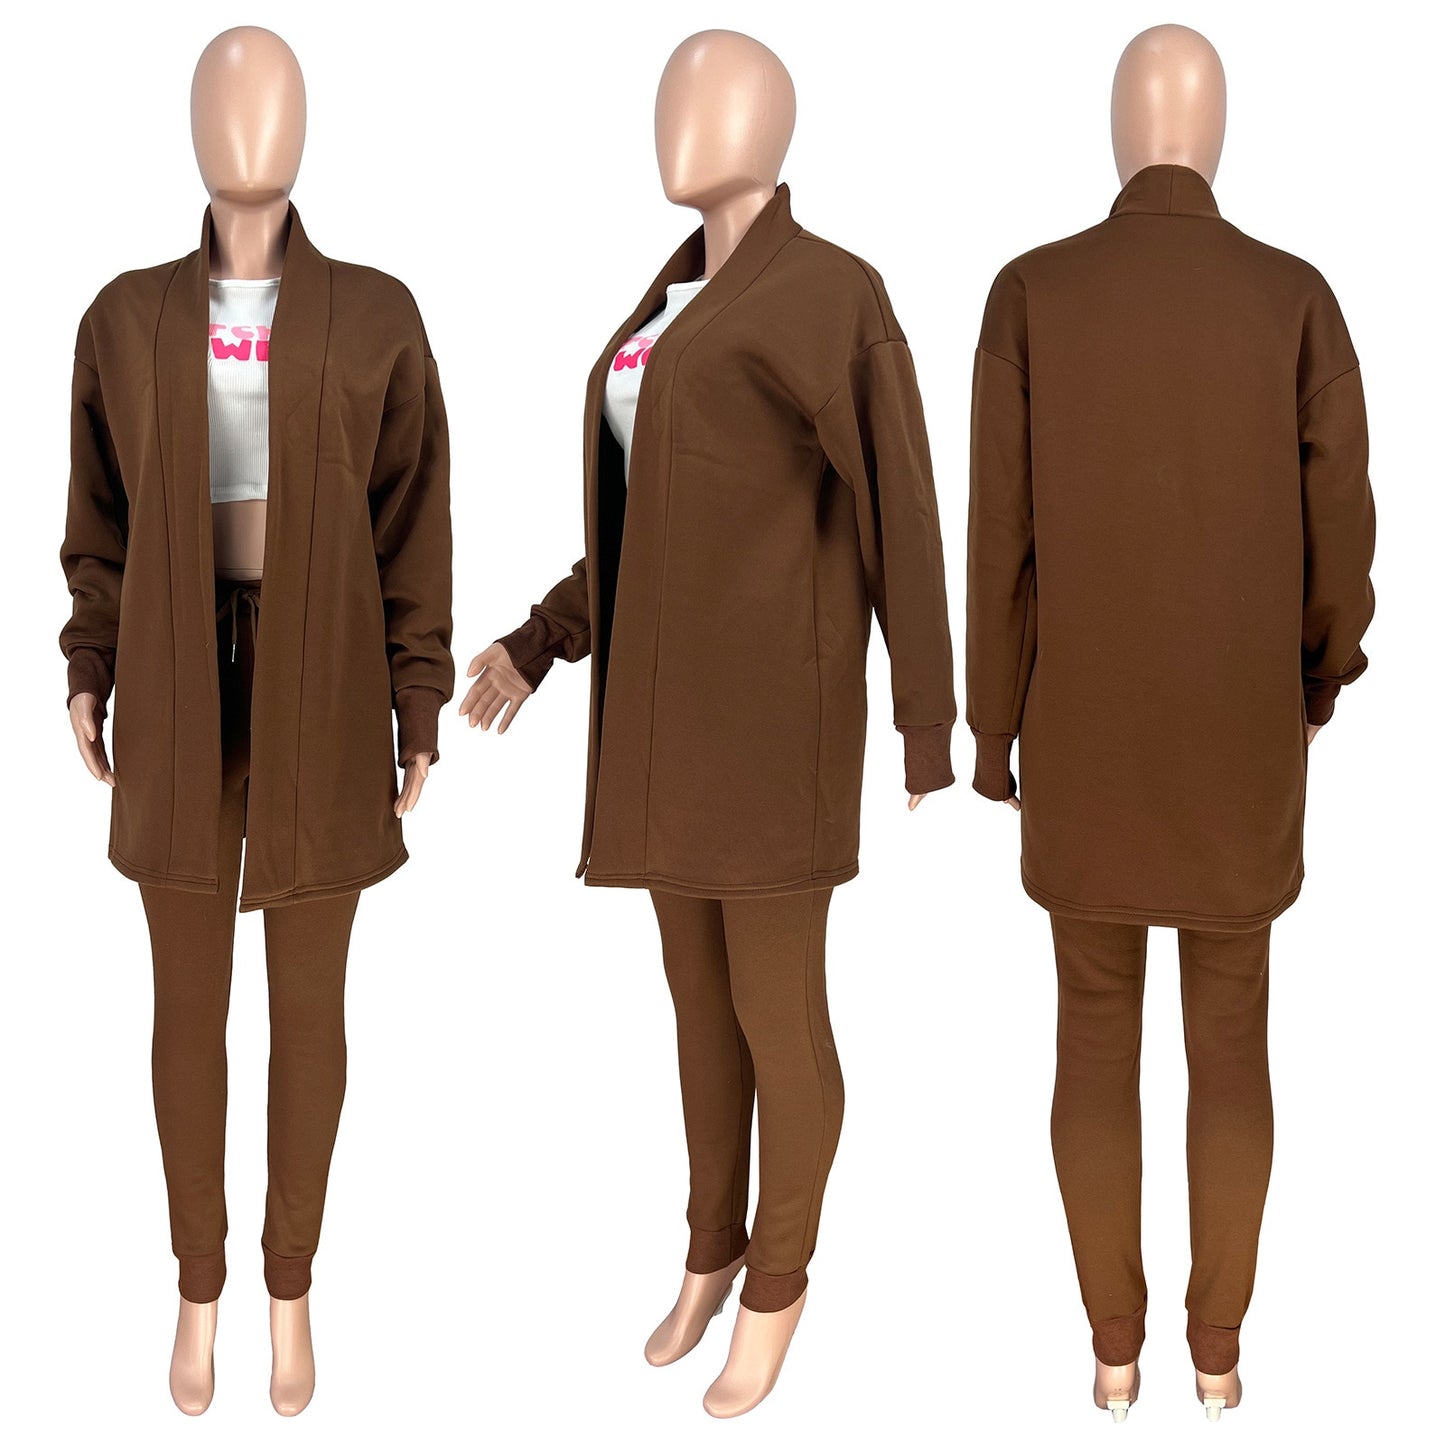 Tracksuit Set - Casual Cardigan Coat and Pants